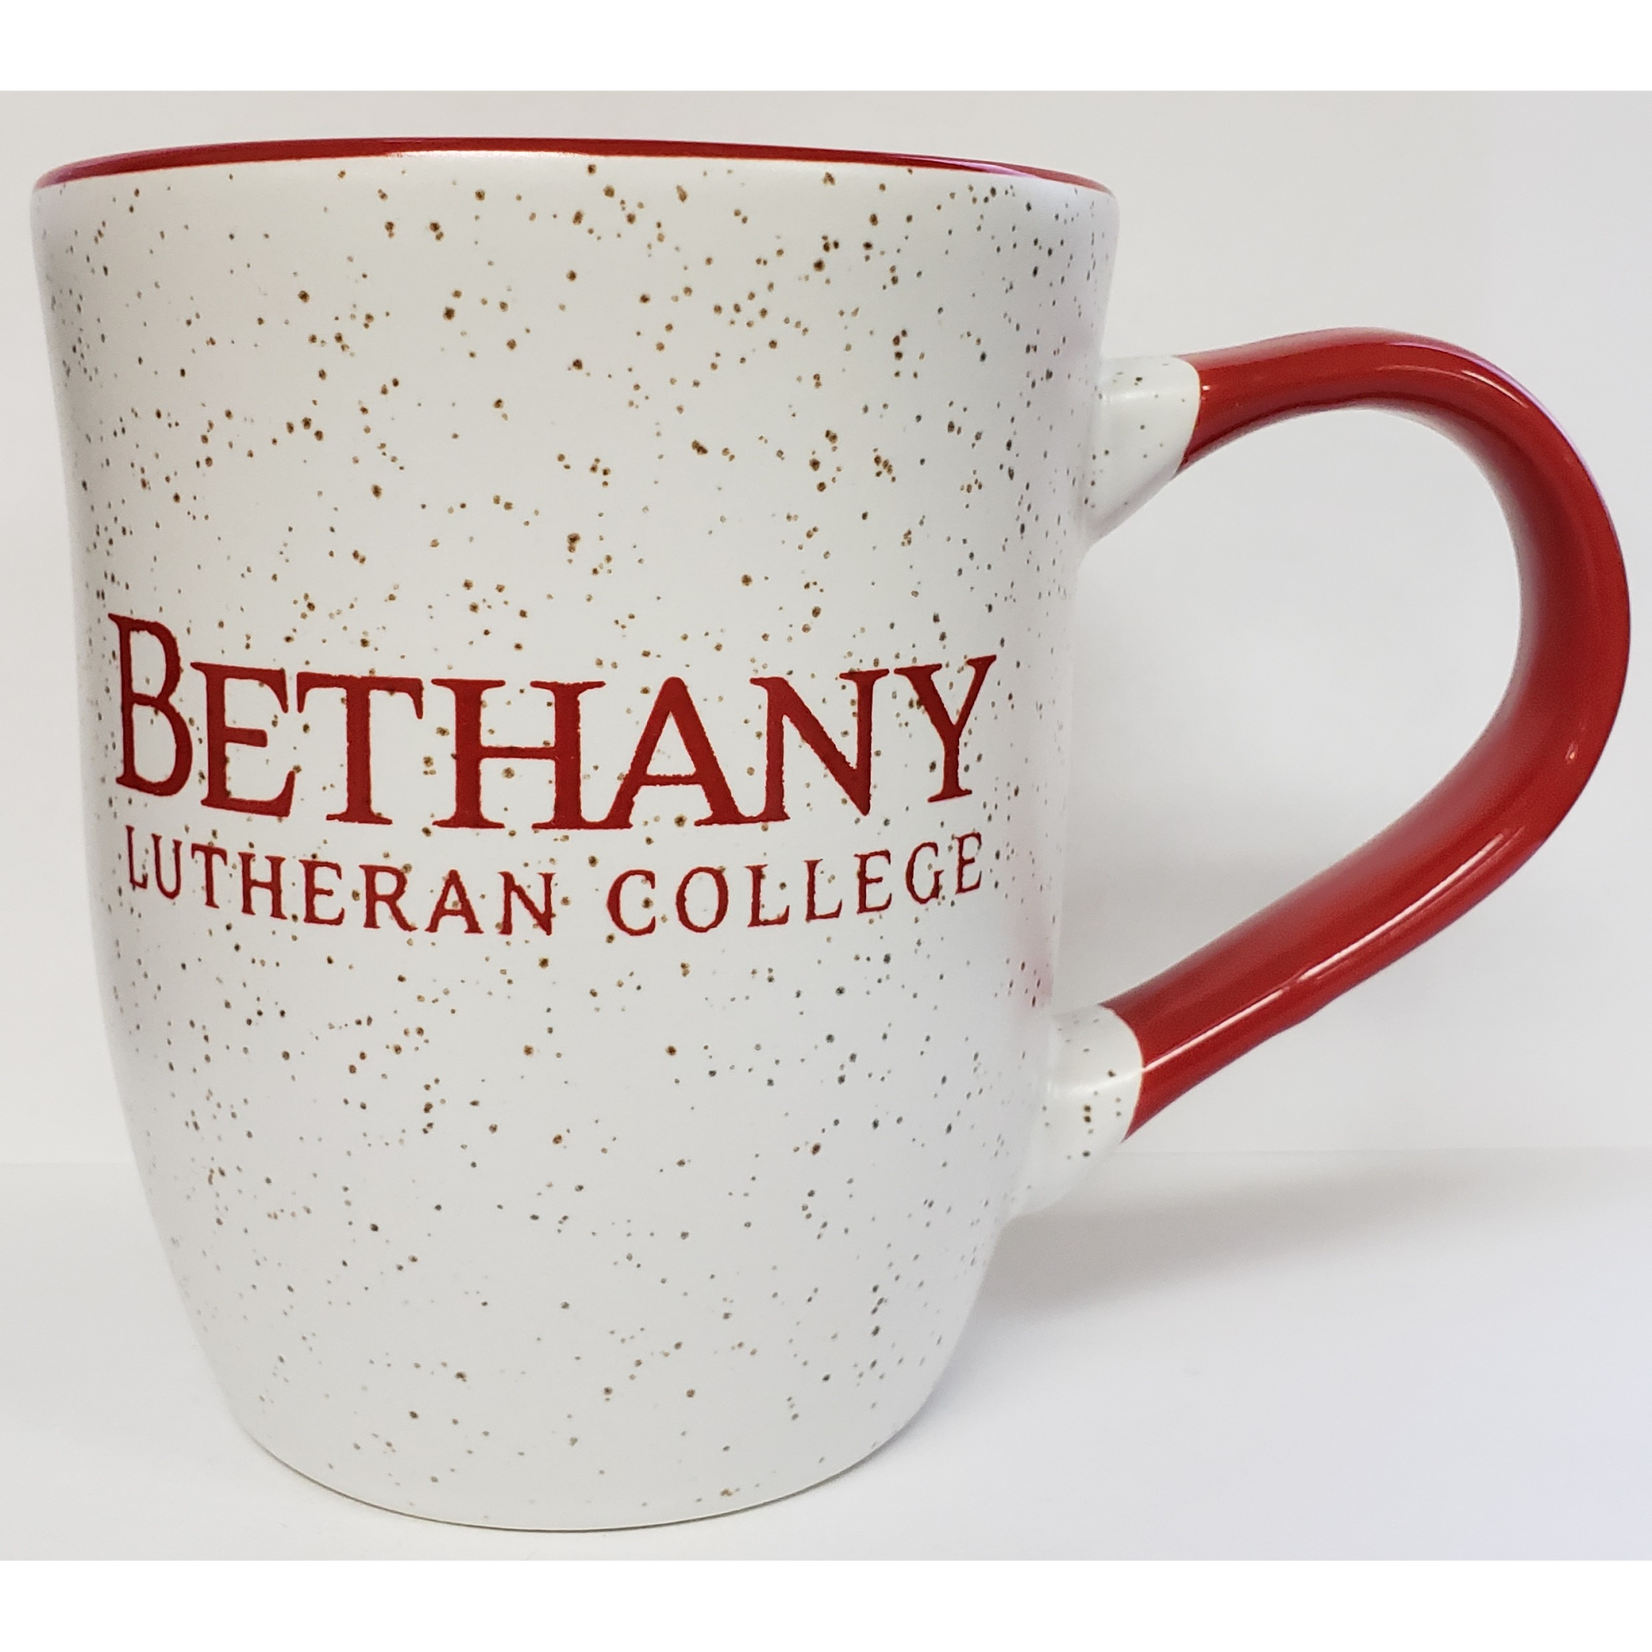 RFSJ Inc. Bethany Lutheran College 16 oz. Mug